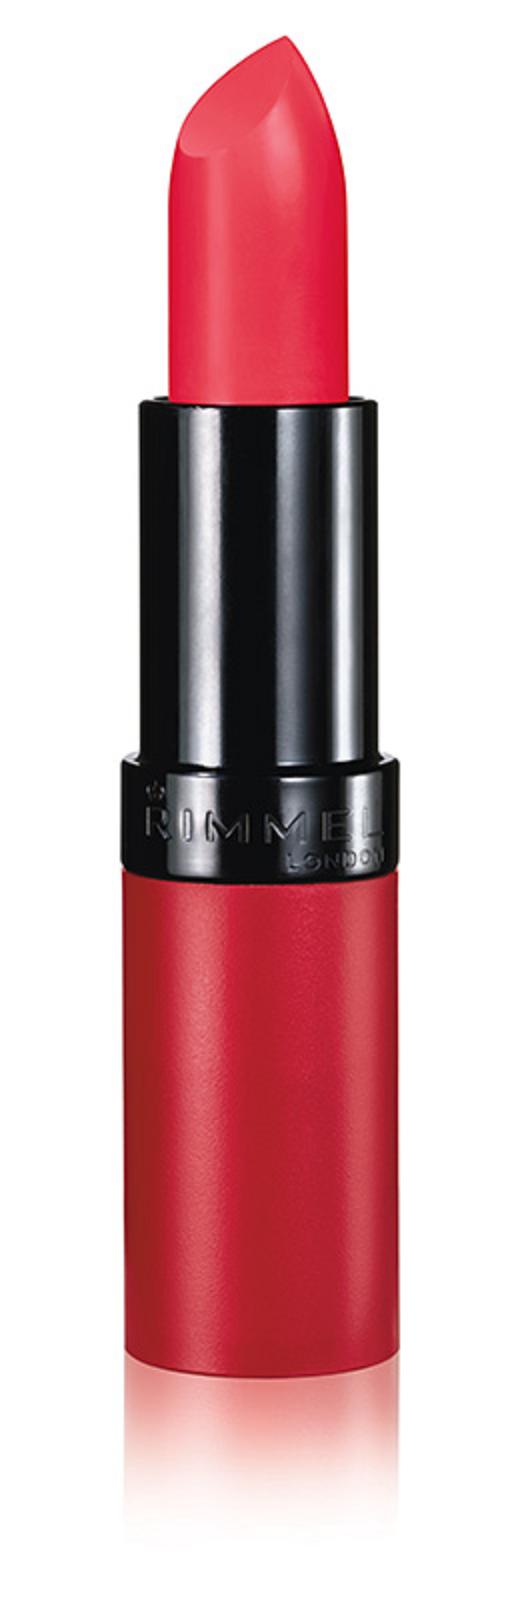 Rimmel Lasting Finish Matte Lipstick by Kate Moss Shade 109